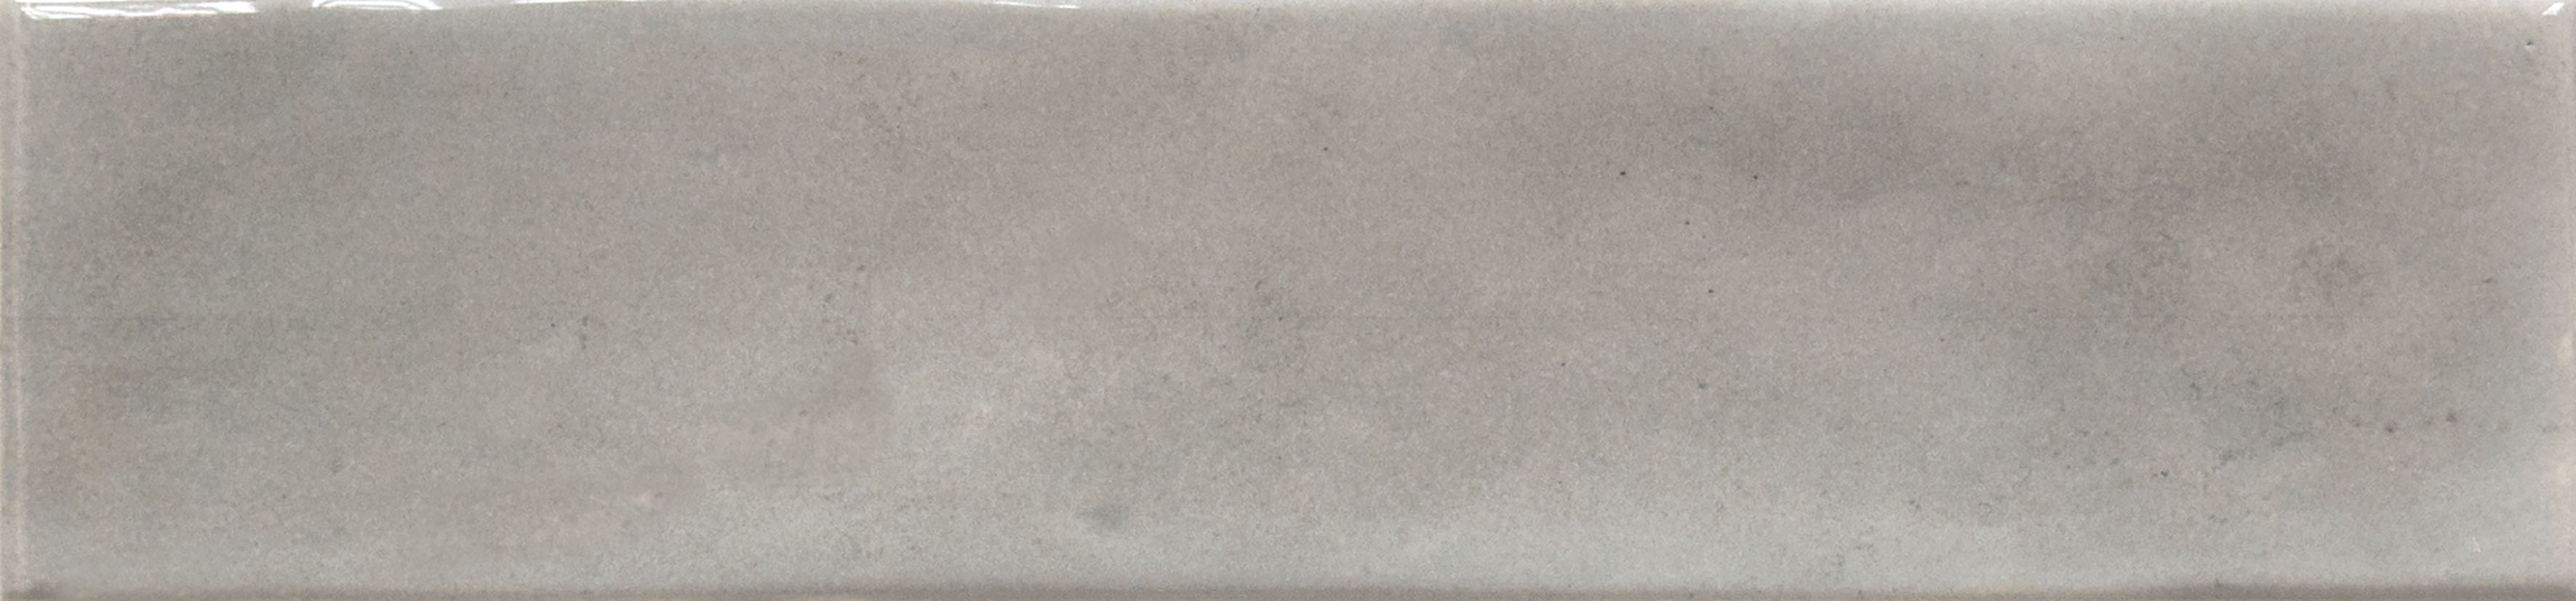 Catalea Gres Nyborg Metrofliese Grau glänzend 7,5x30 cm  